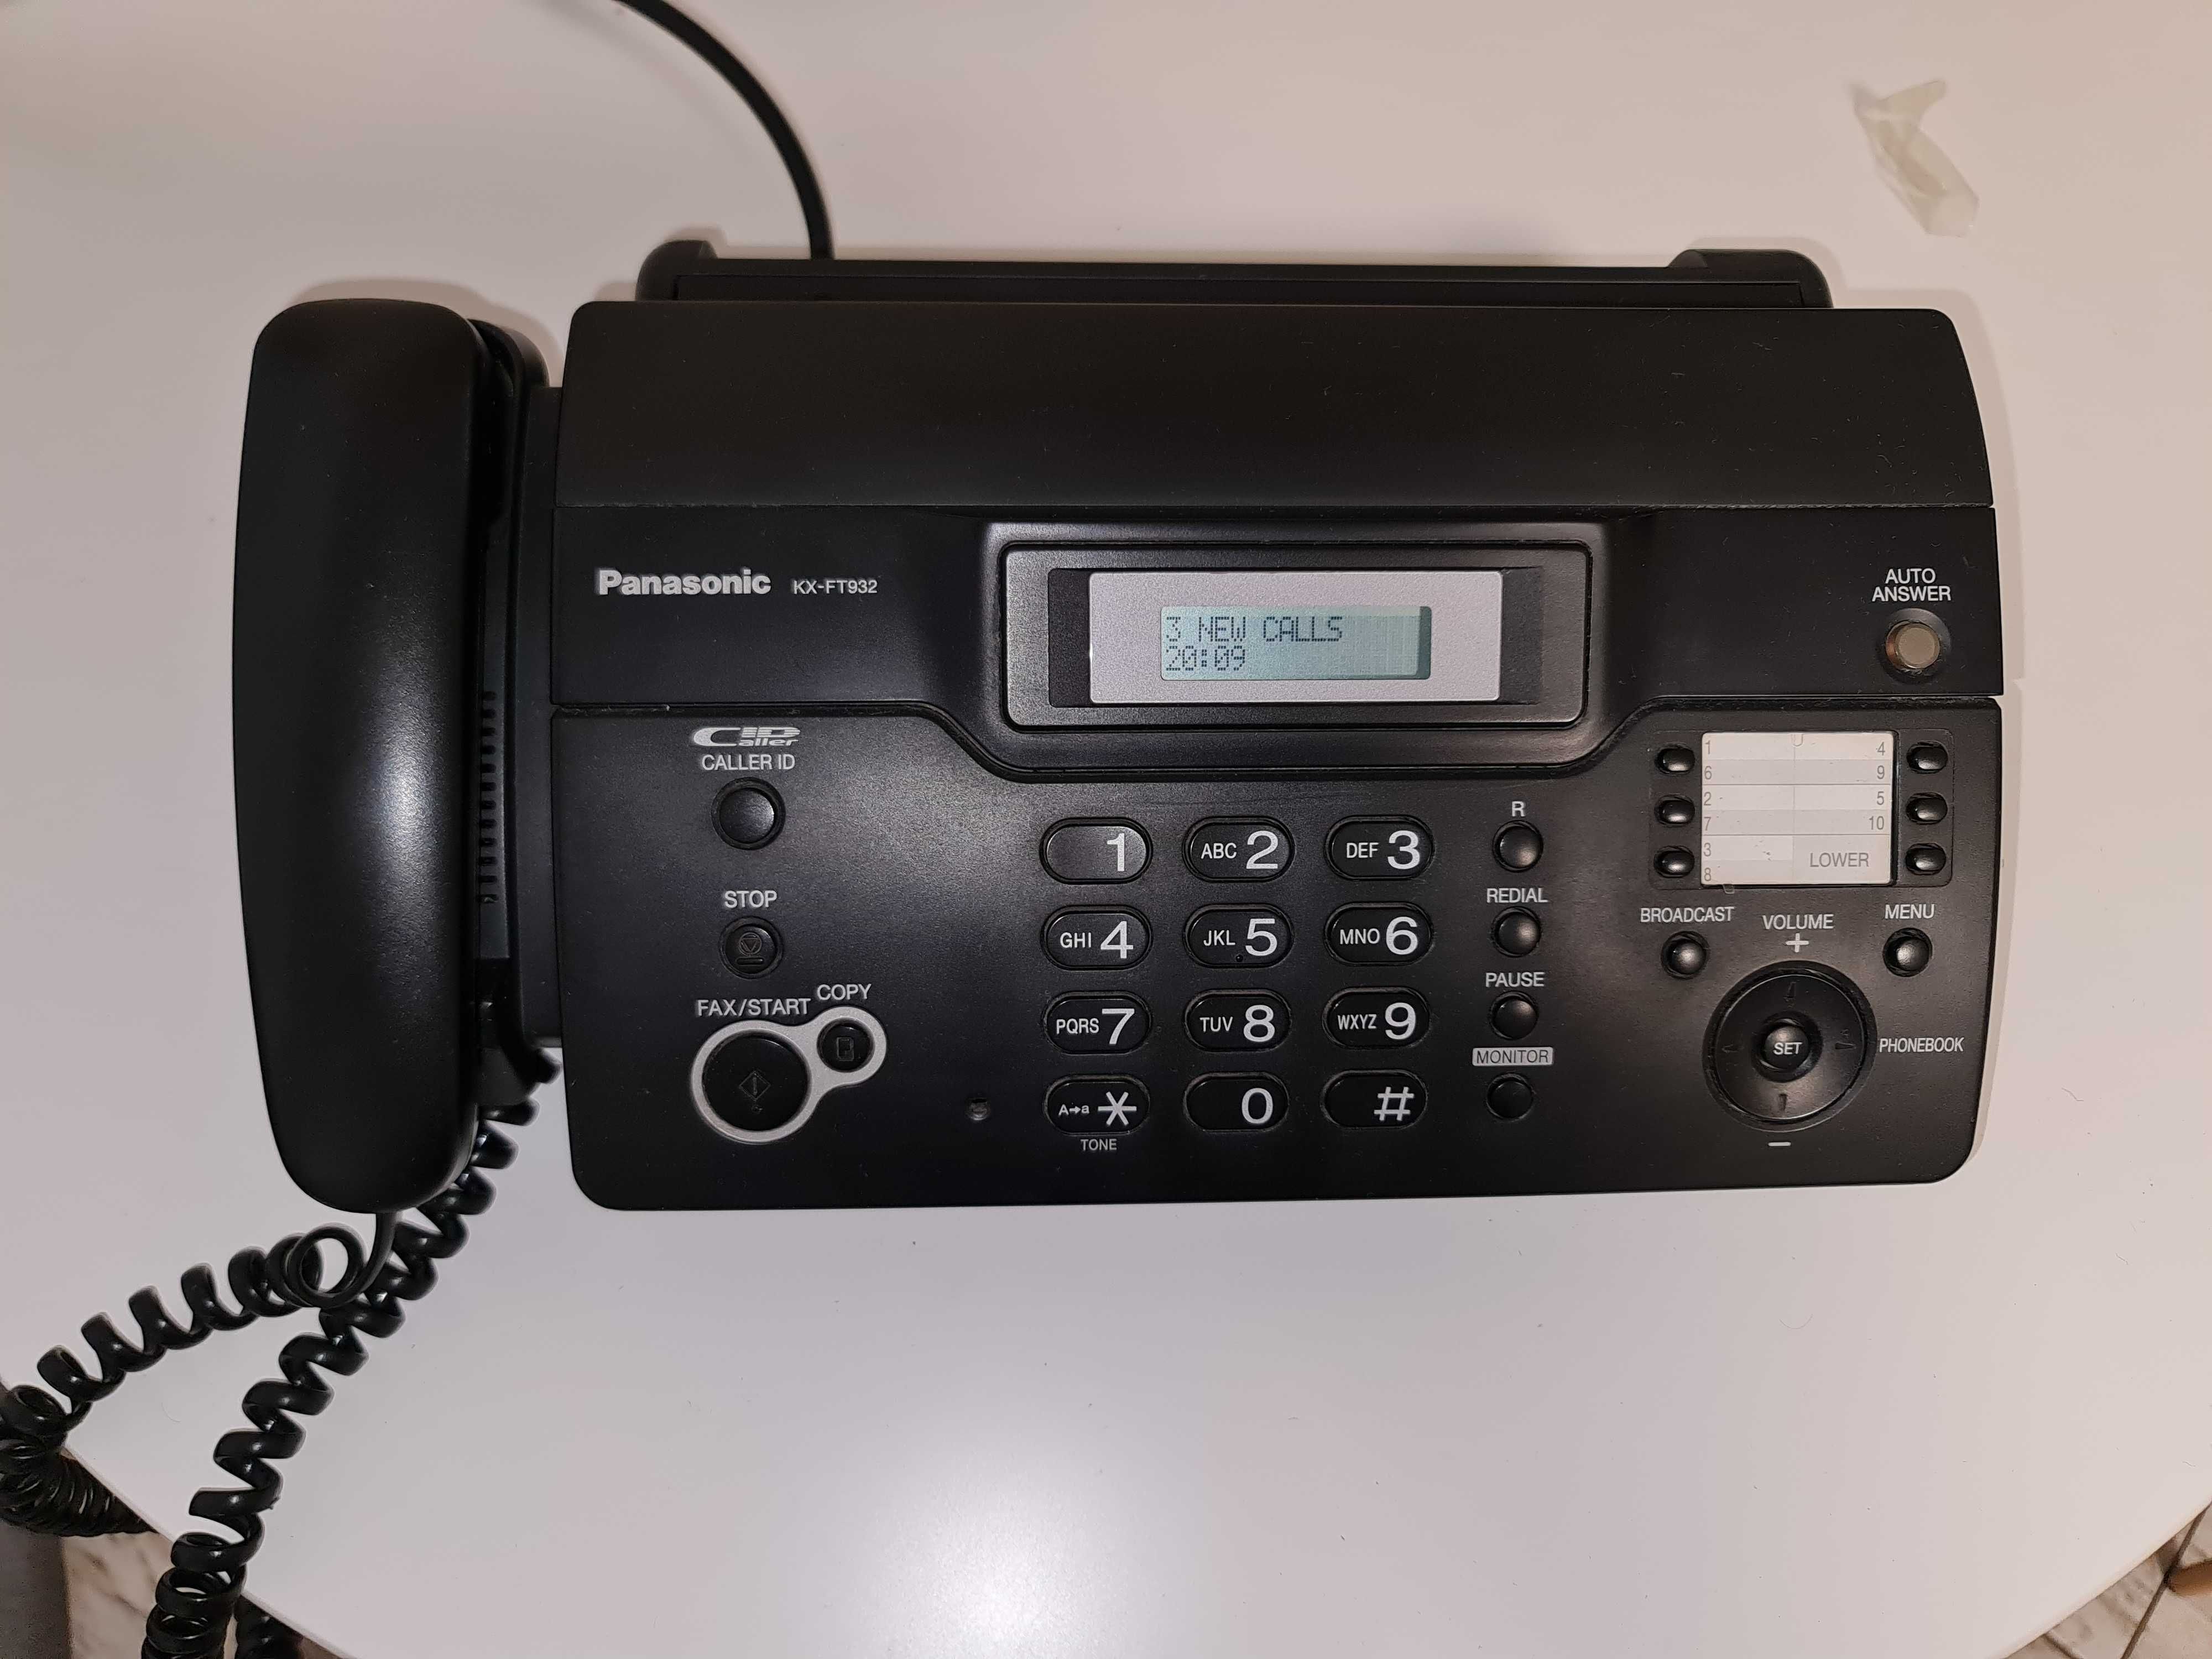 Panasonic KX-FT932 - telefon/fax/robot telefonic – cu hartie termica